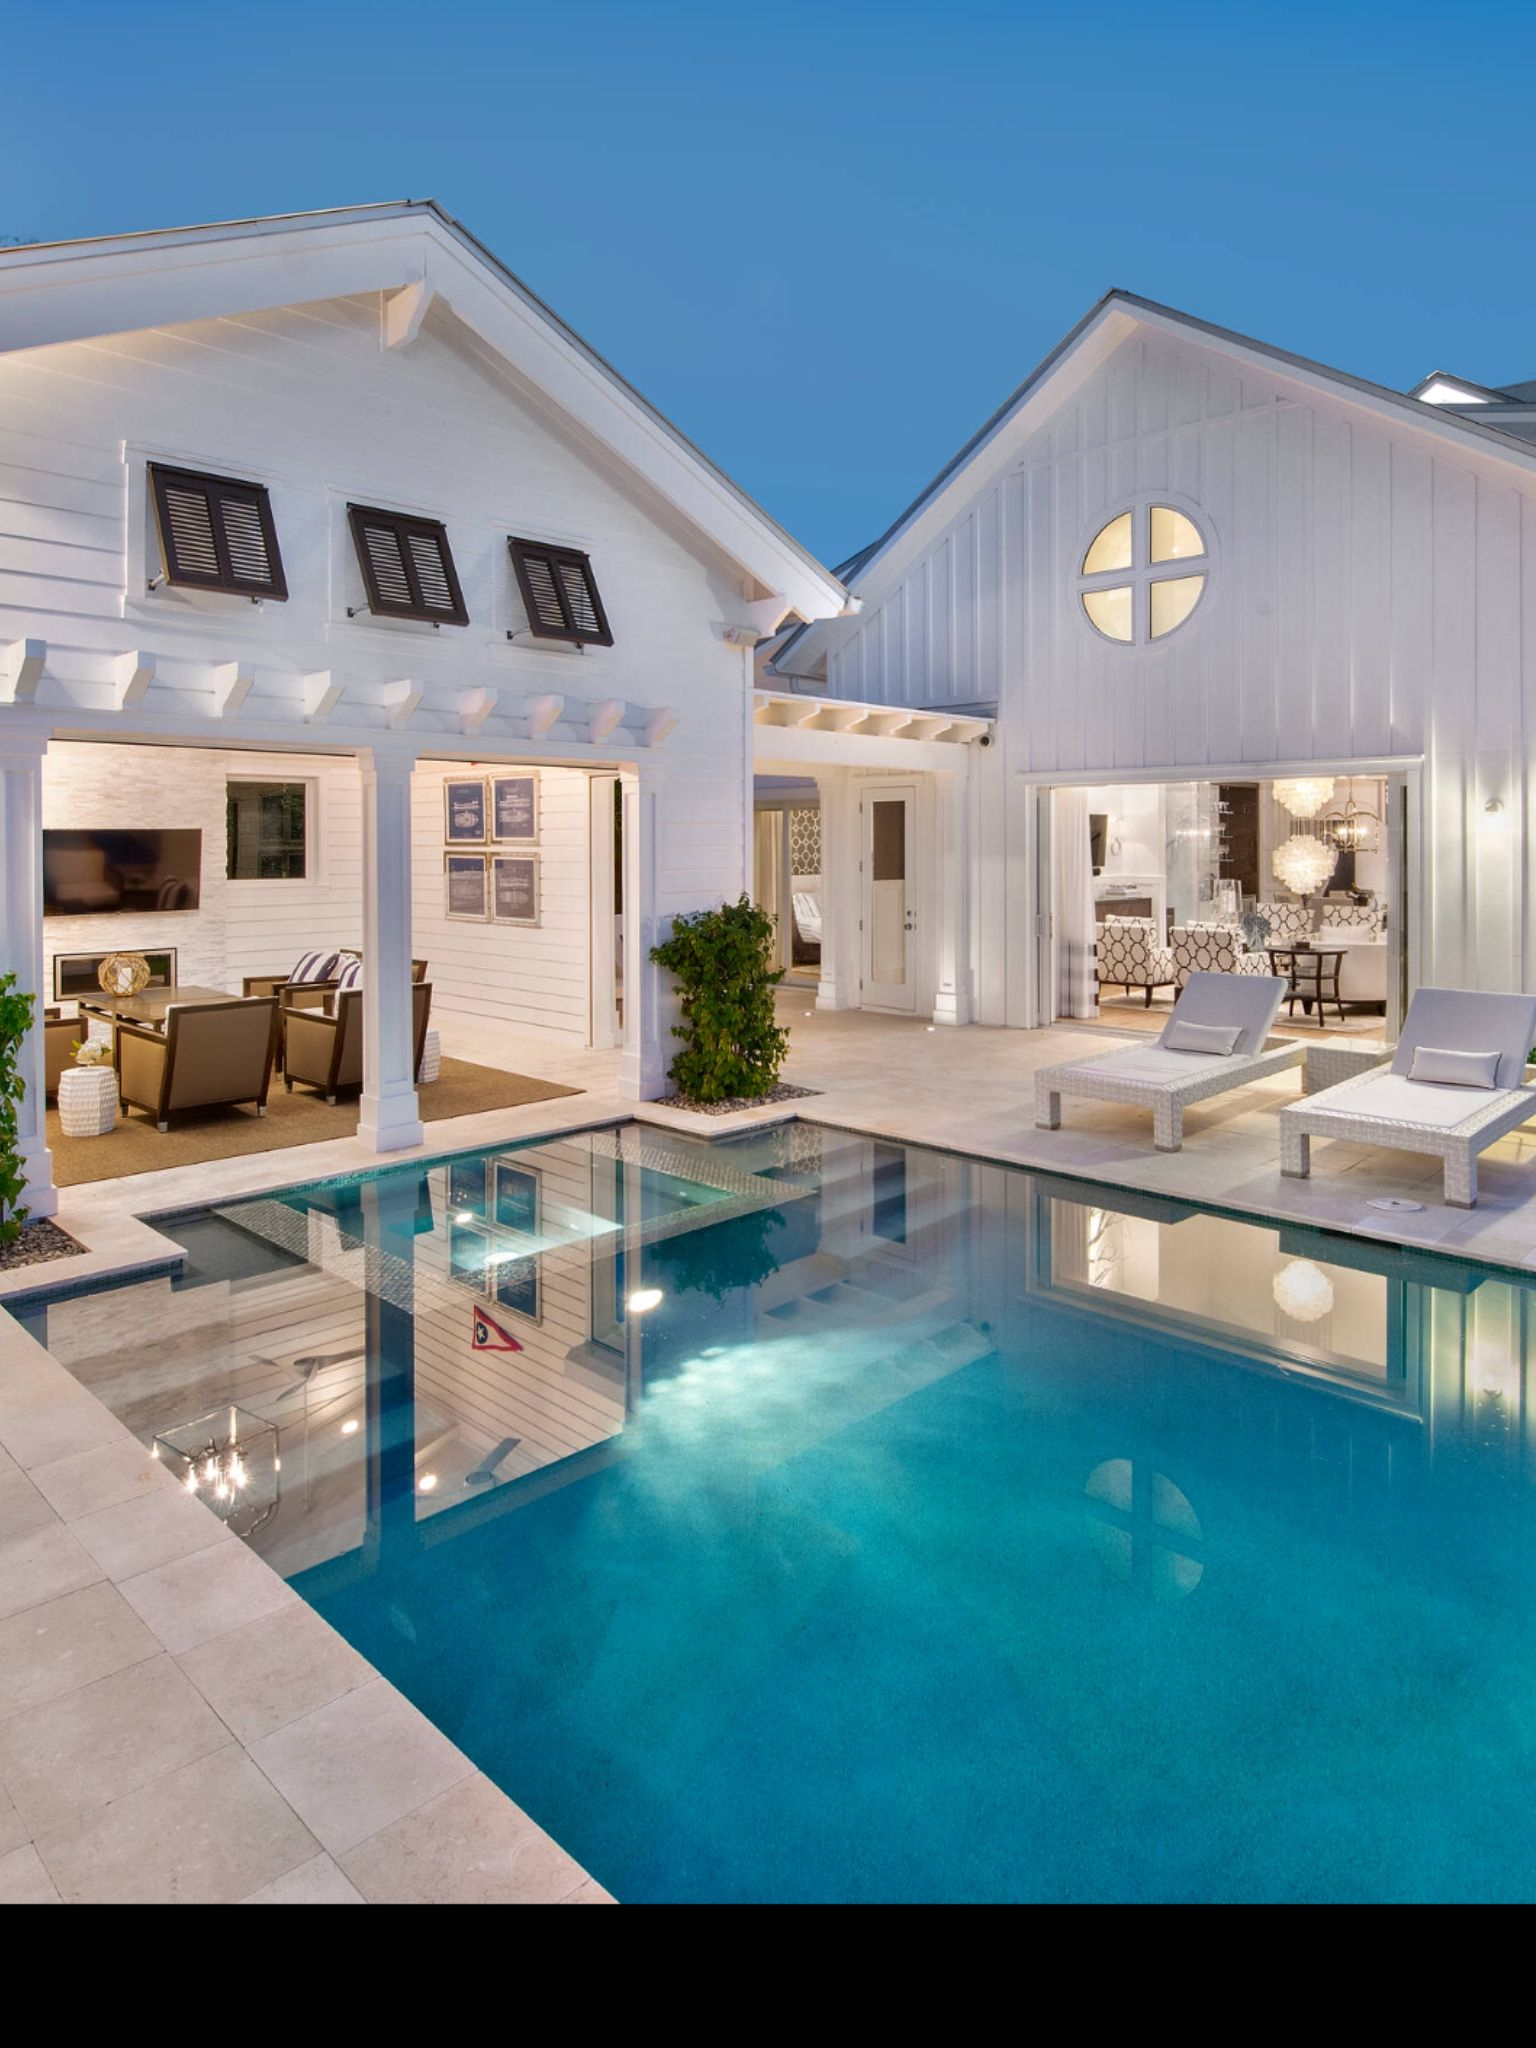 Pool And Cabana | Pool House Designs, Pool Houses, House dedans Pool House Plans Idees